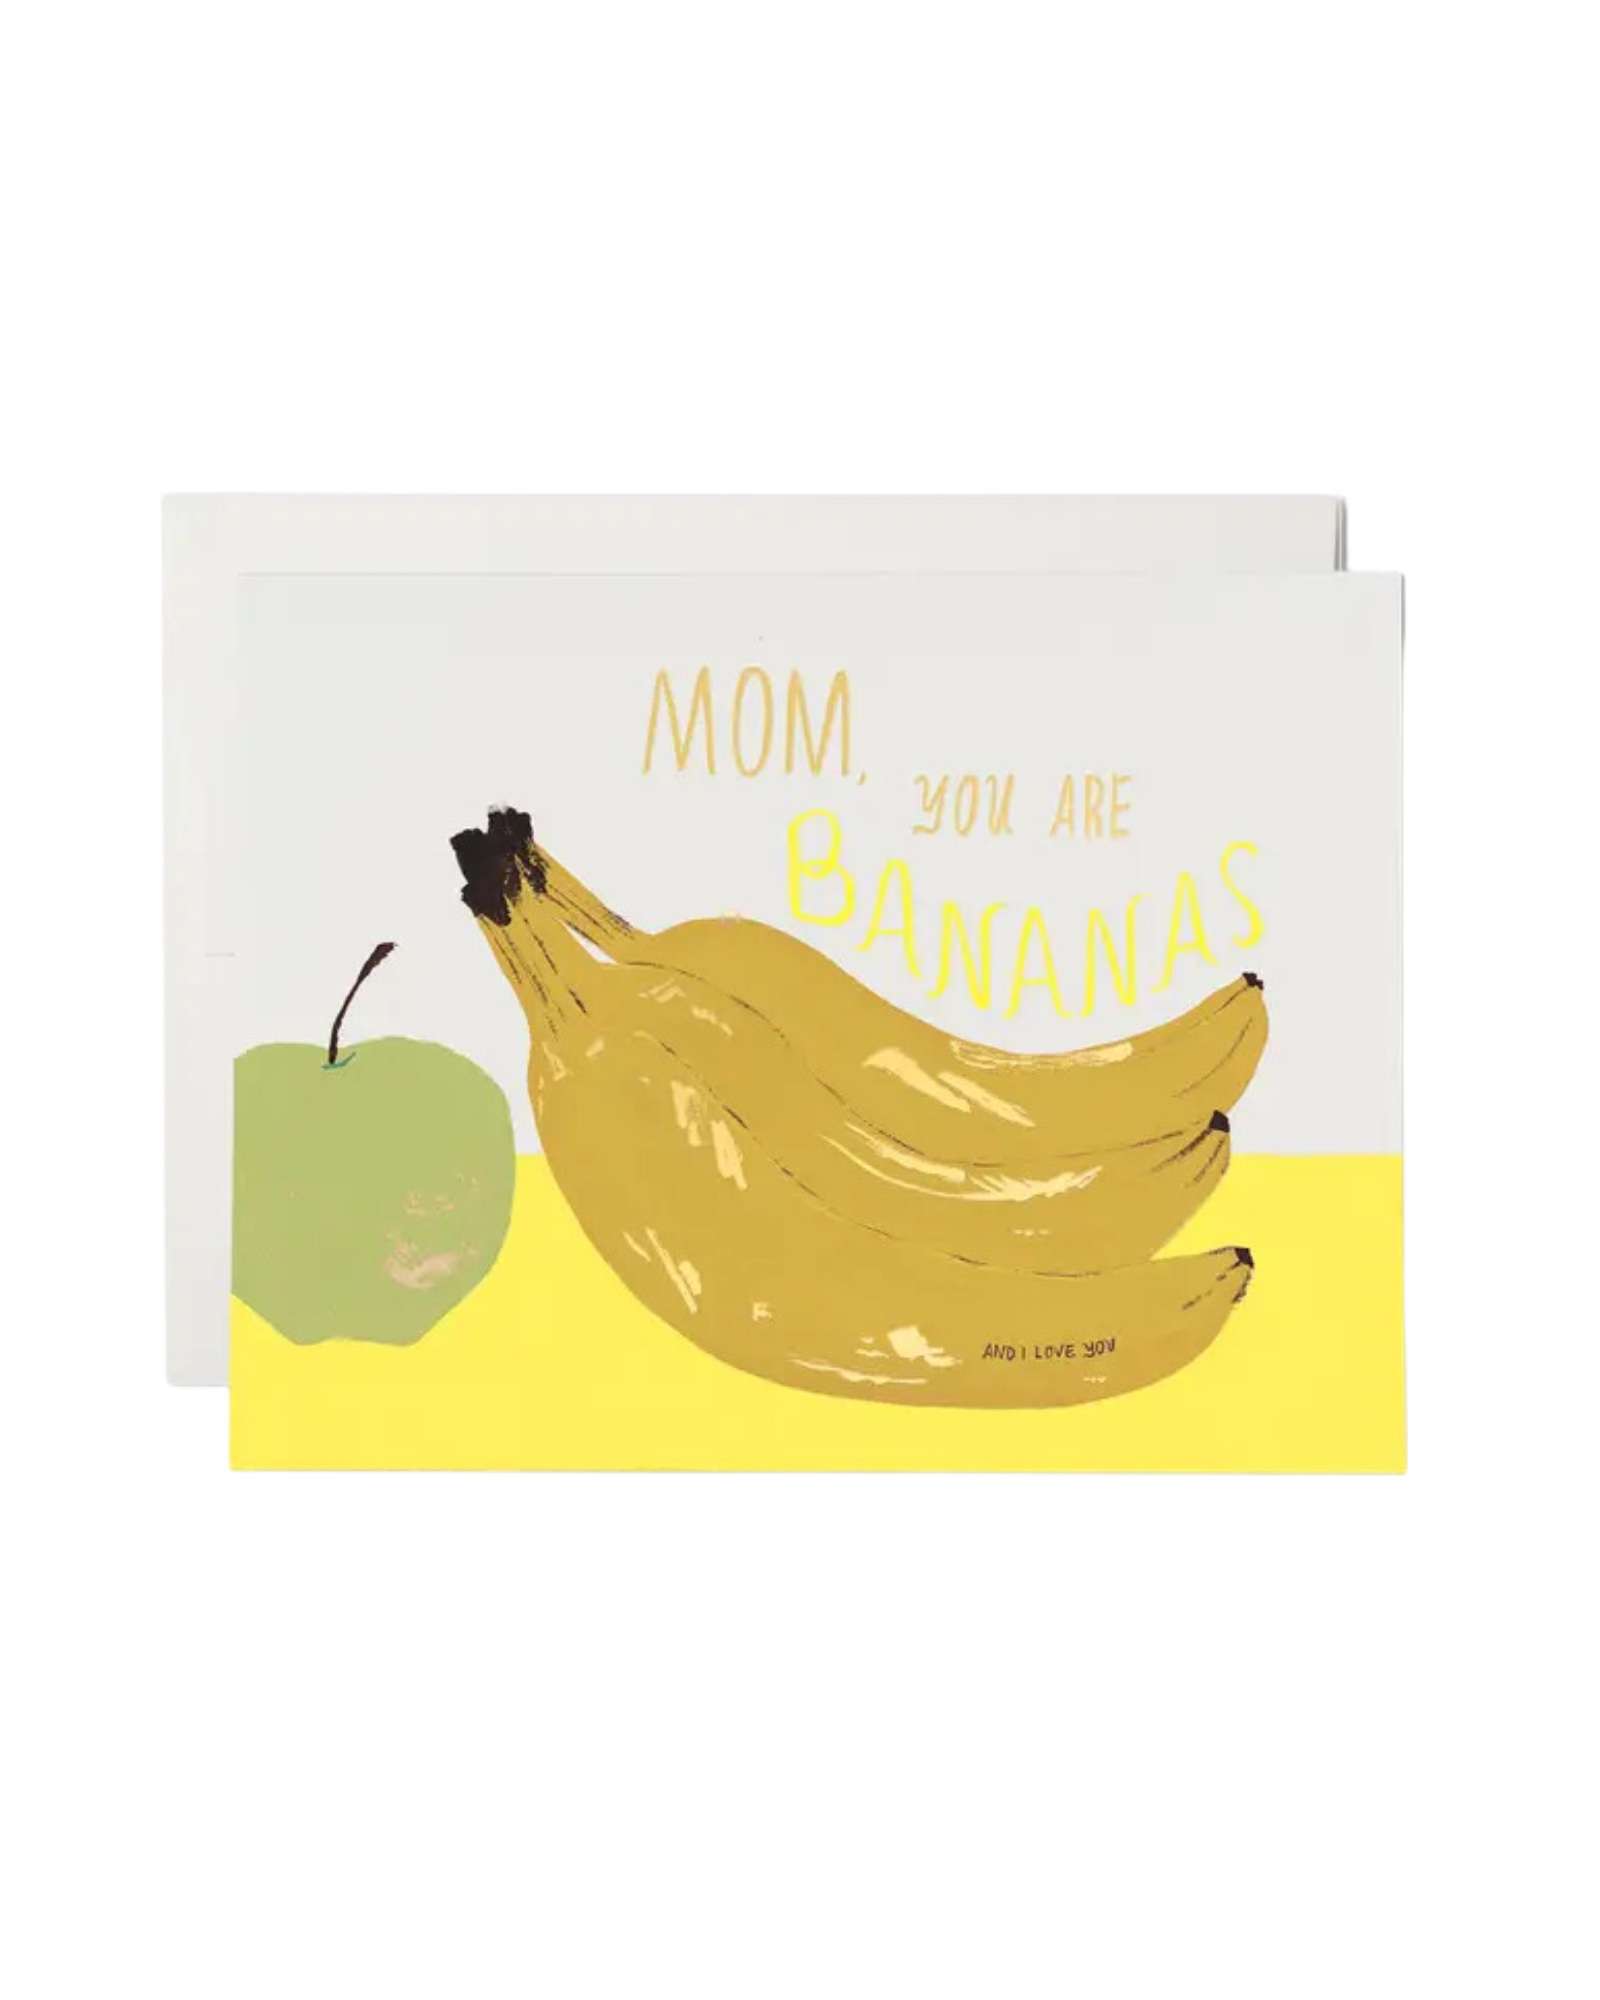 You are Bananas Mom Greeting Card